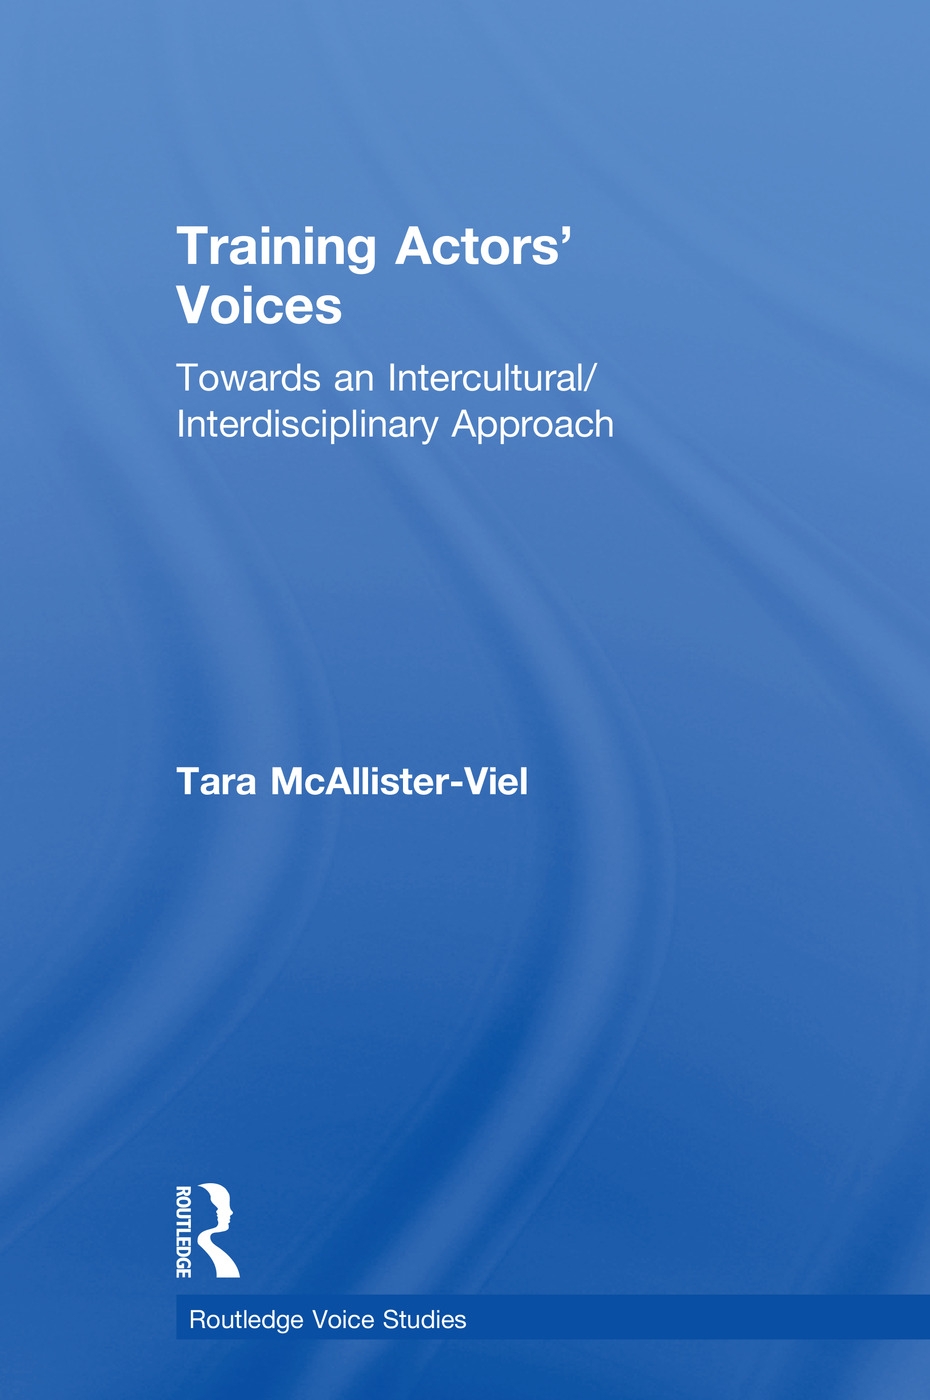 Training Actors’ Voices: Towards an Intercultural/Interdisciplinary Approach